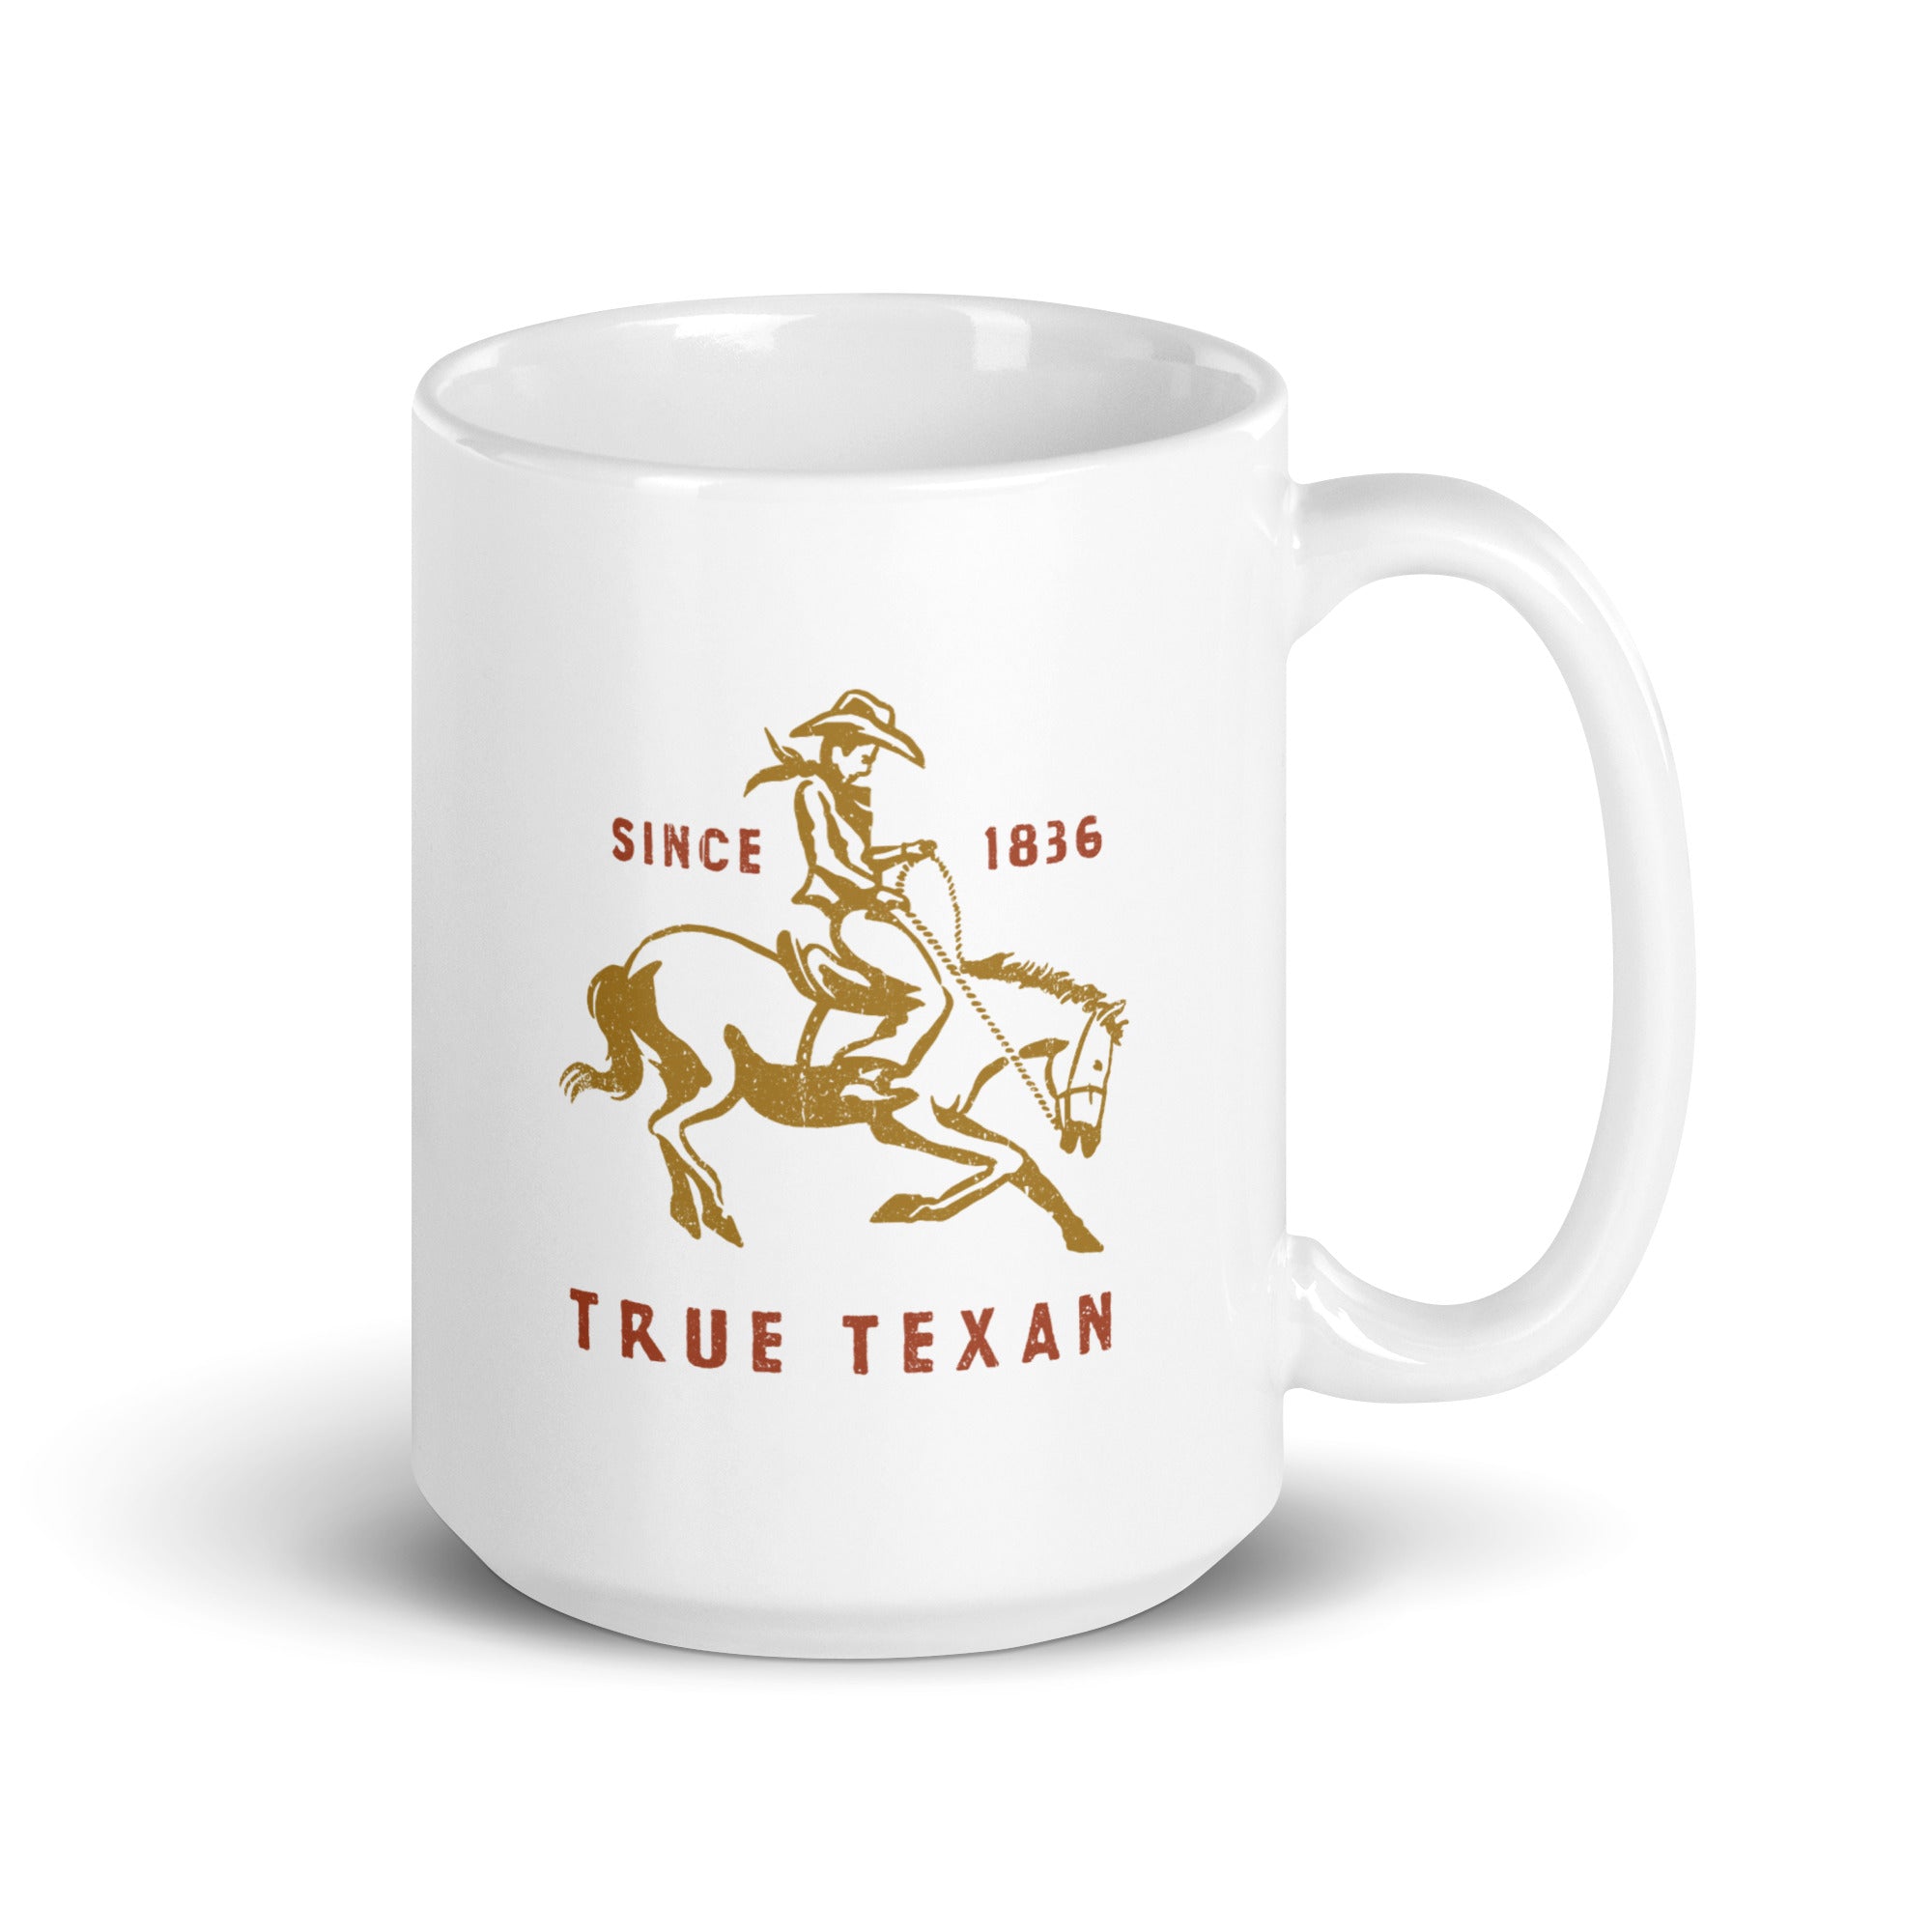 True Texan Mug